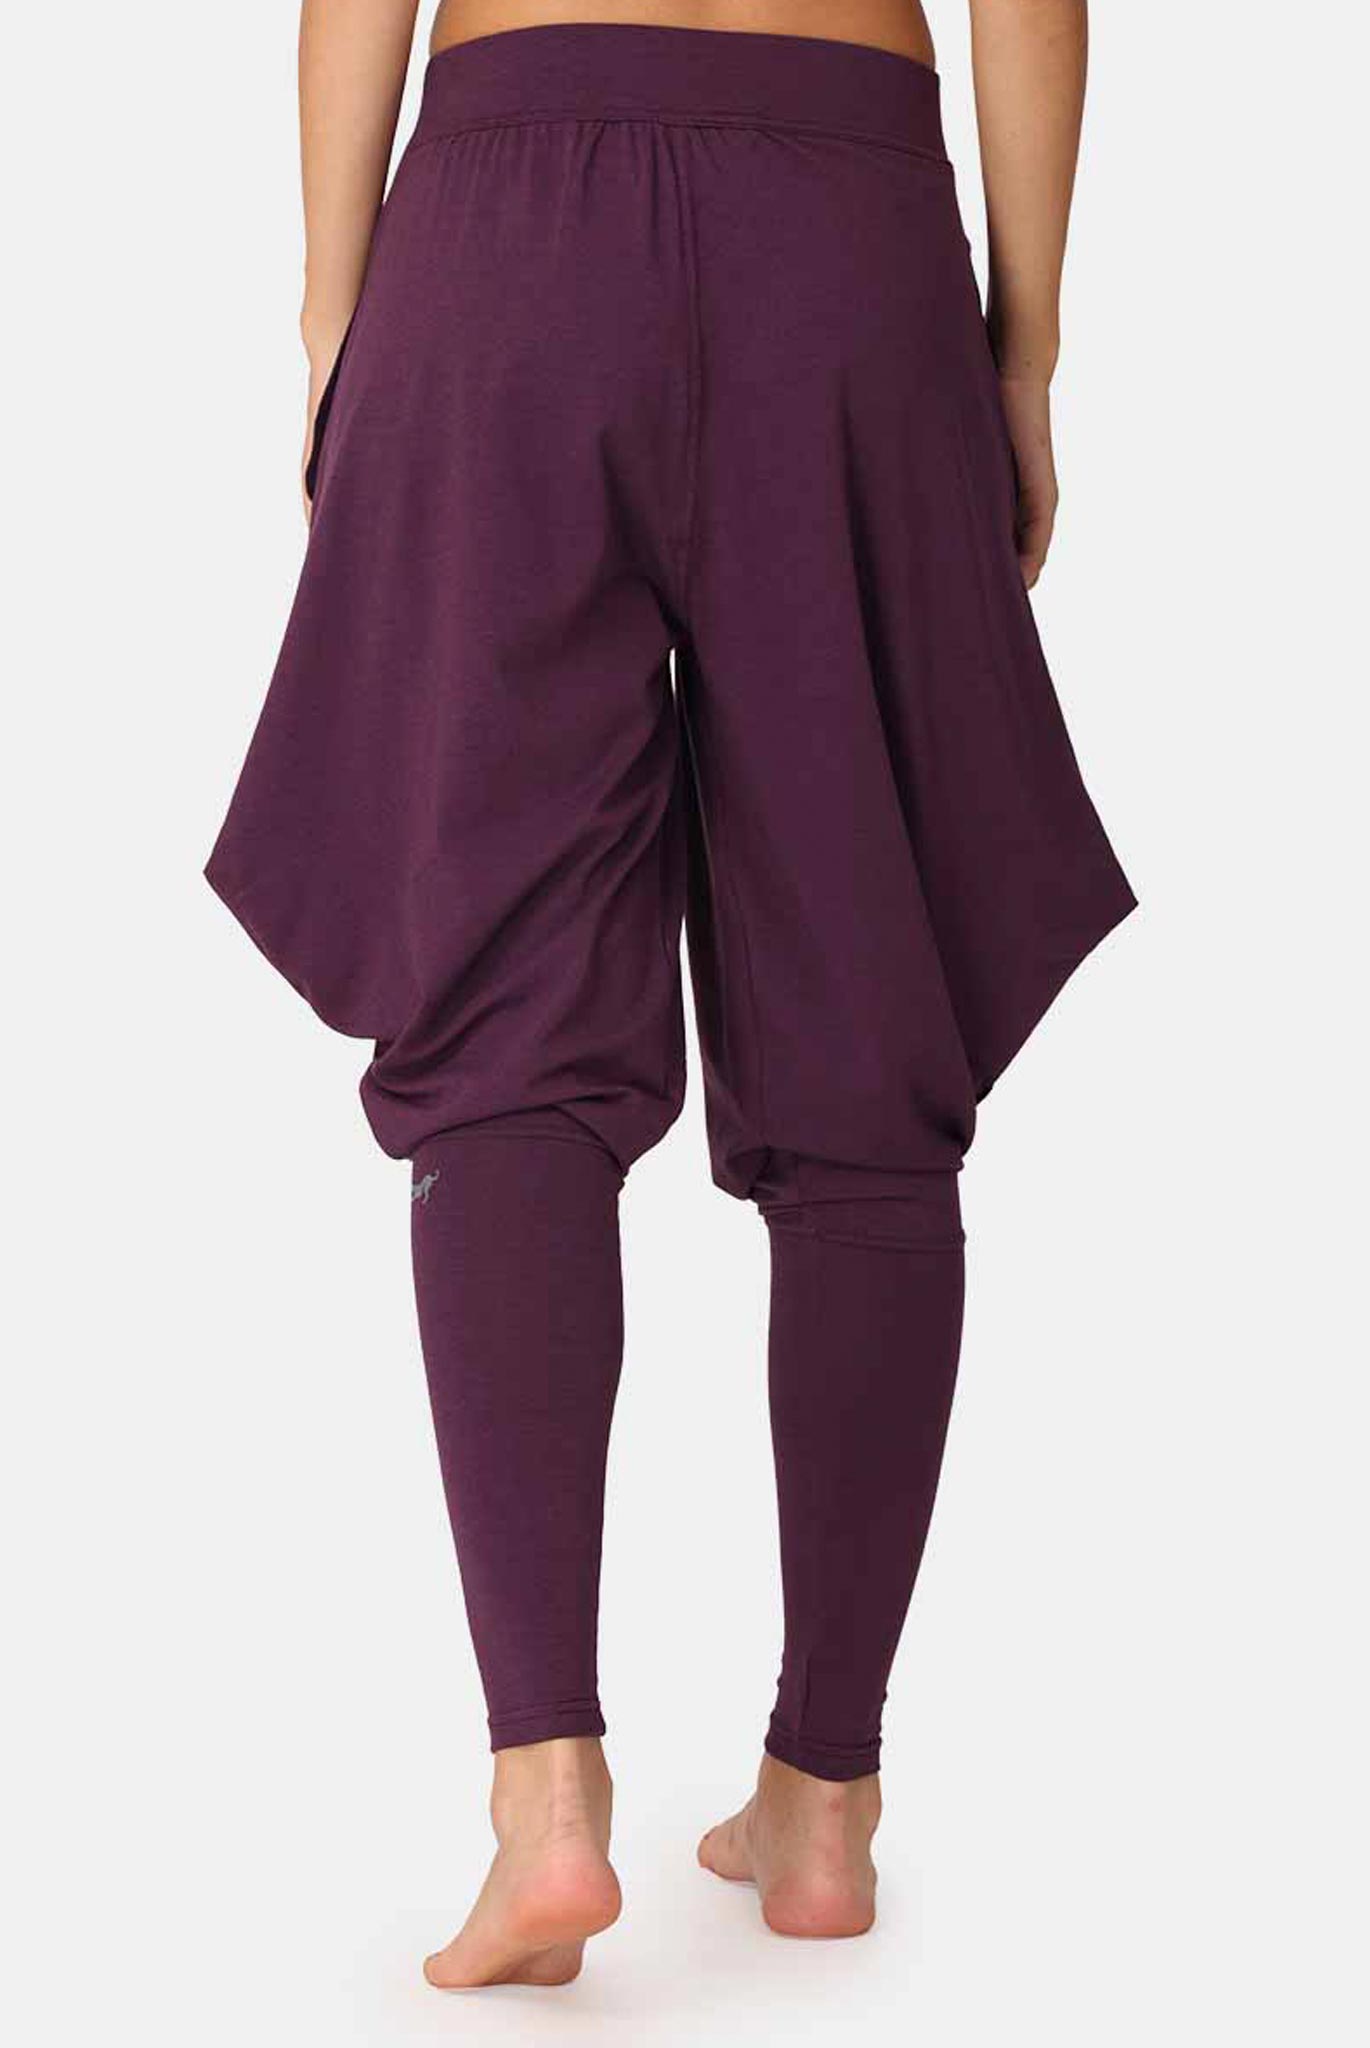 Eriko Cotton Yoga Pants | eBay